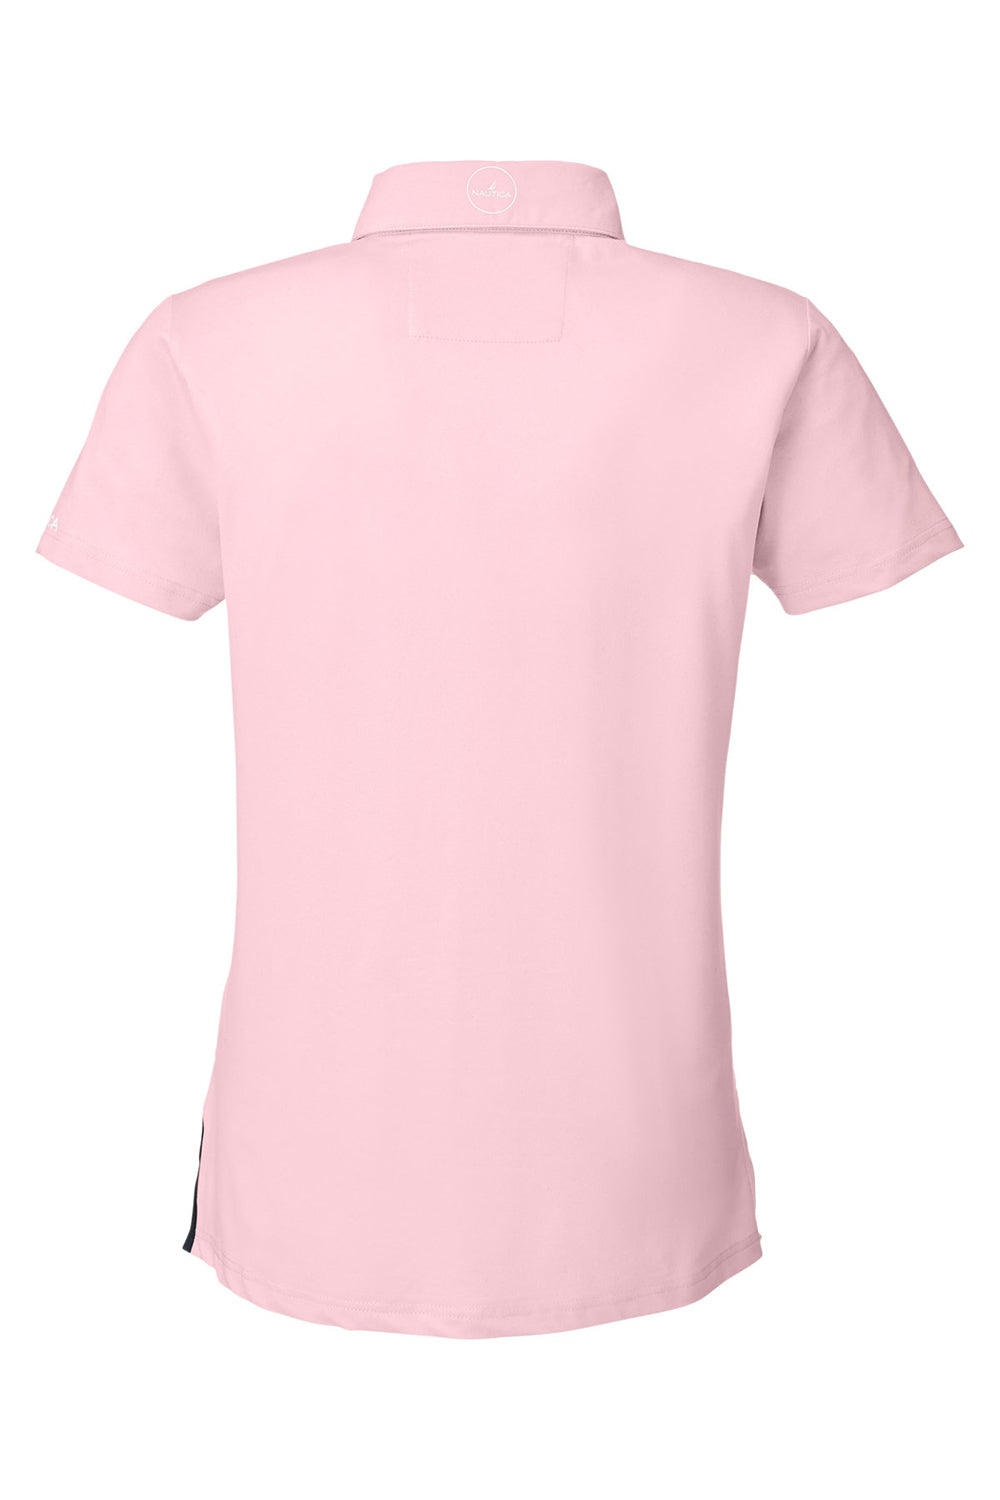 Nautica N17923 Womens Saltwater Short Sleeve Polo Shirt Sunset Pink Flat Back